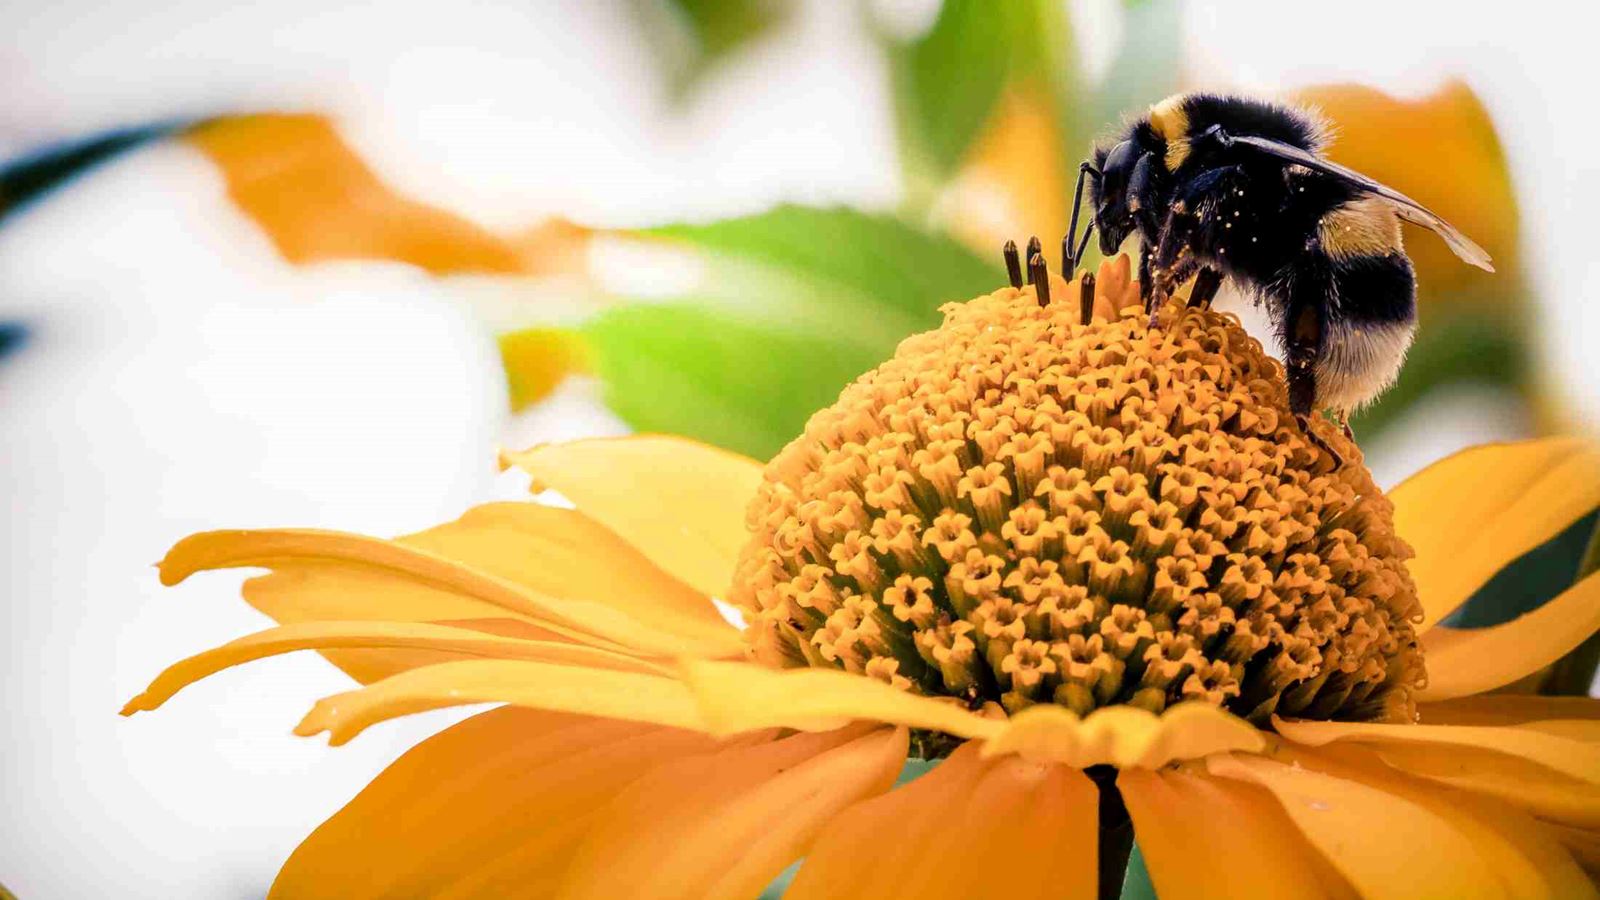 Bumblebee on flower